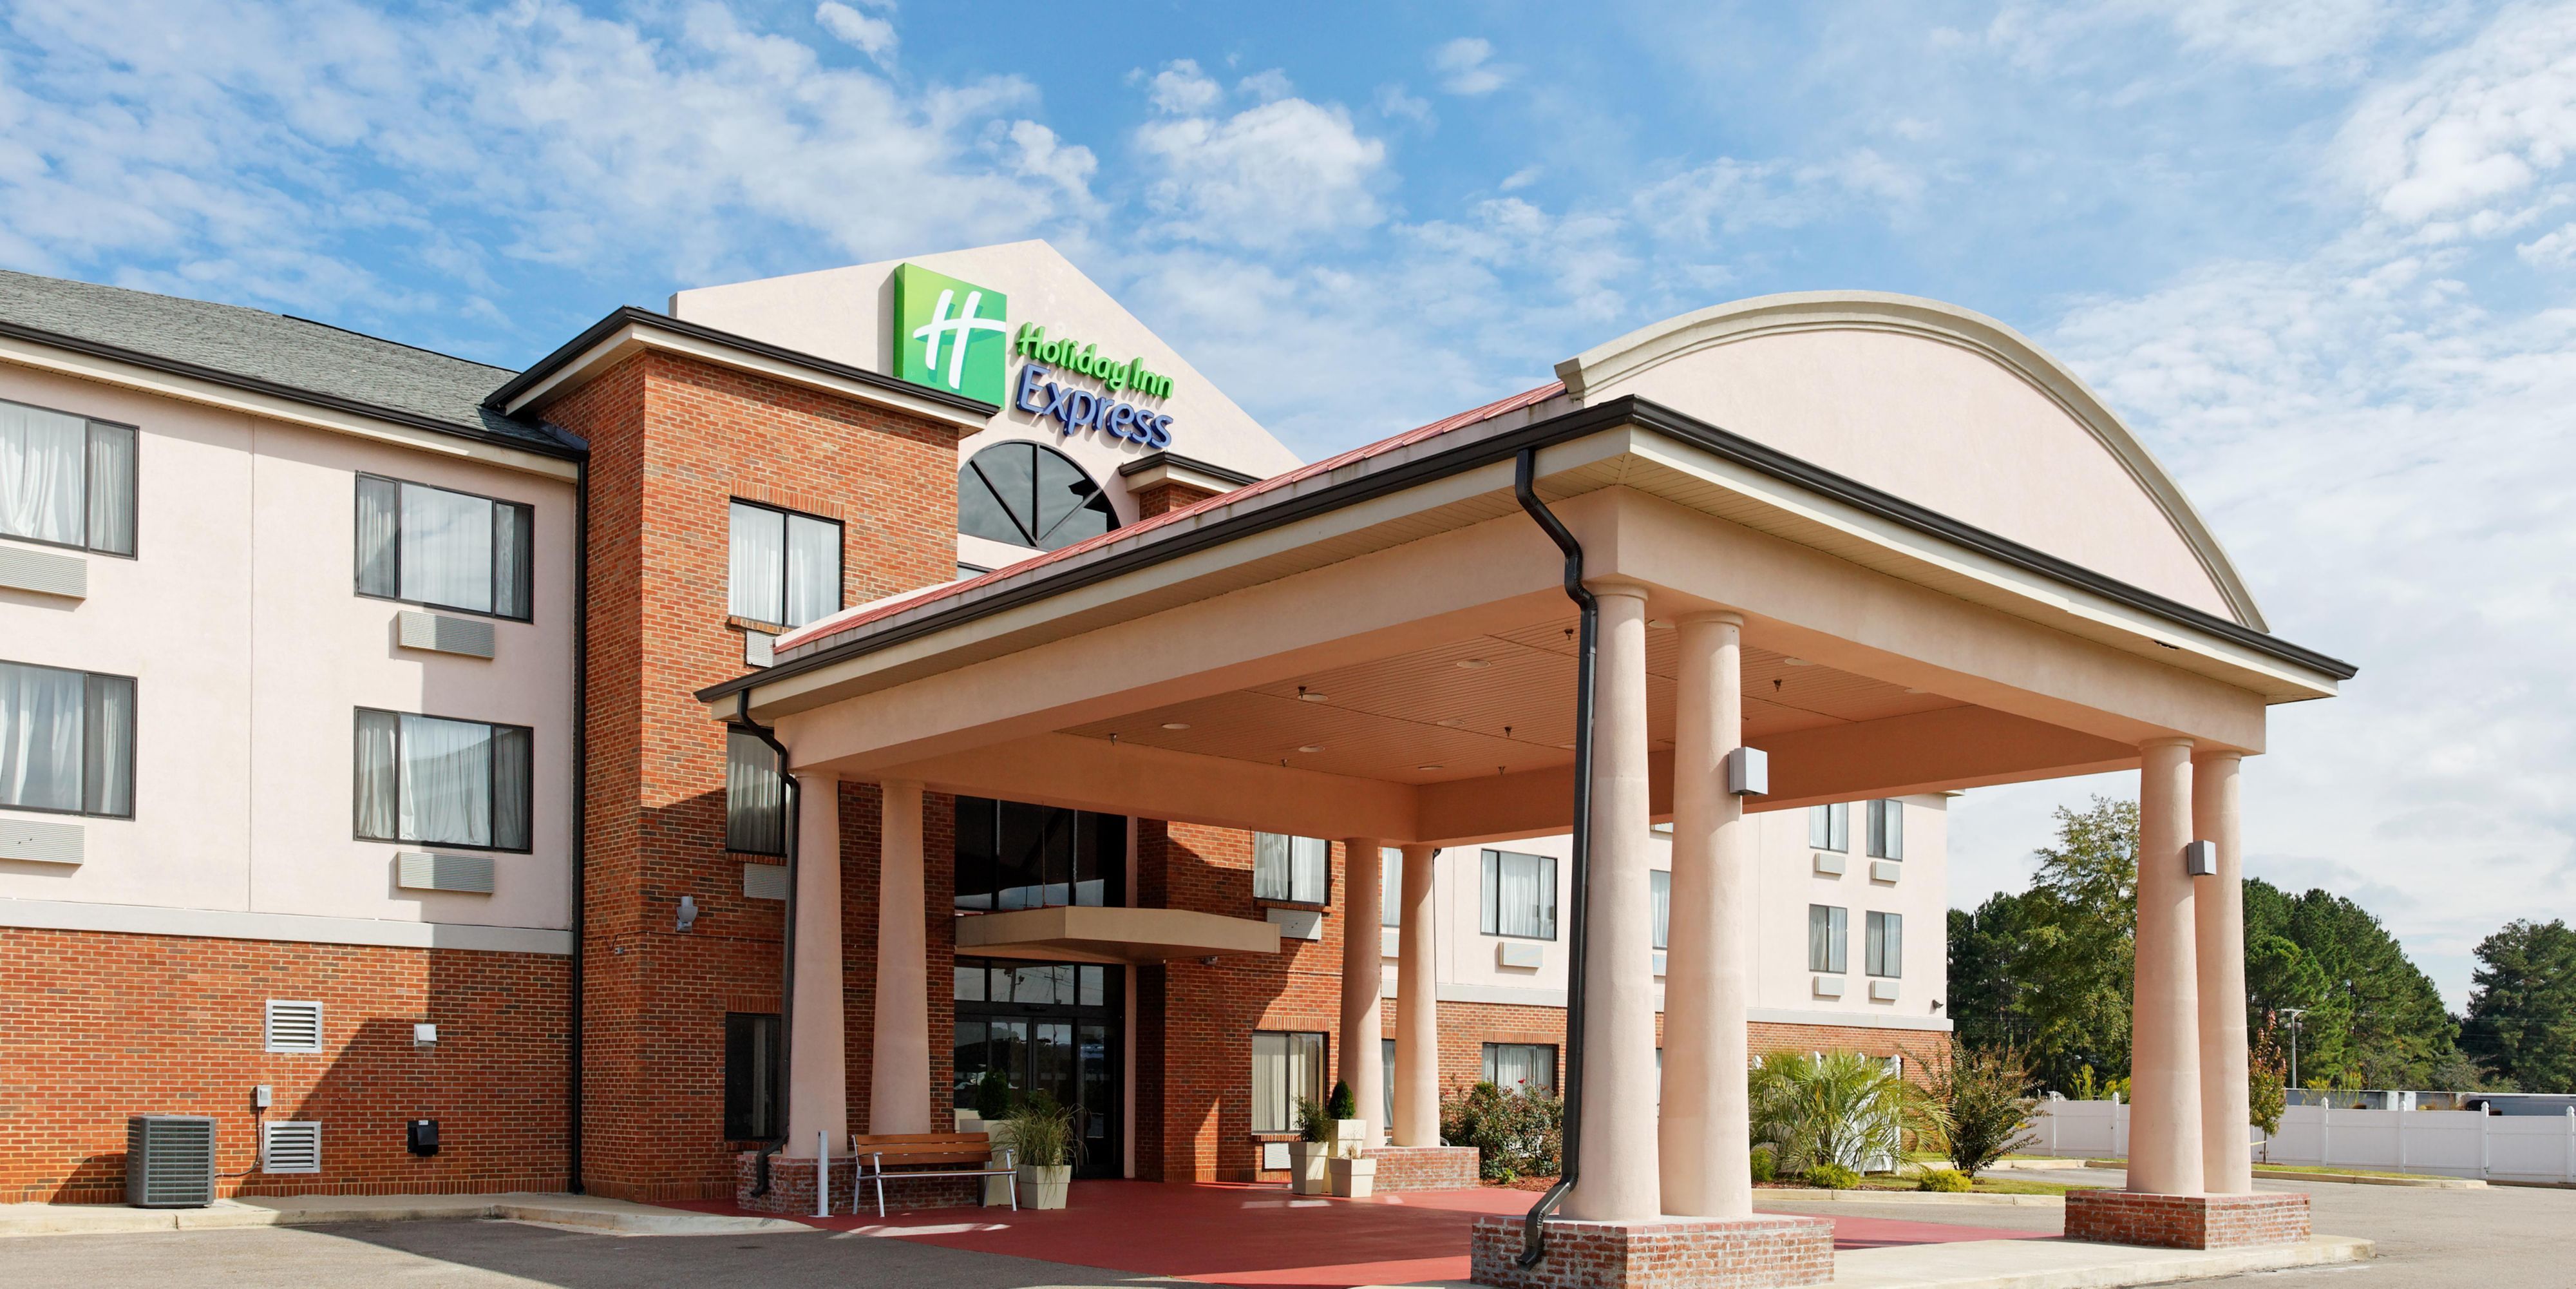 Photo of Holiday Inn Express & Suites Sylacauga, Sylacauga, AL